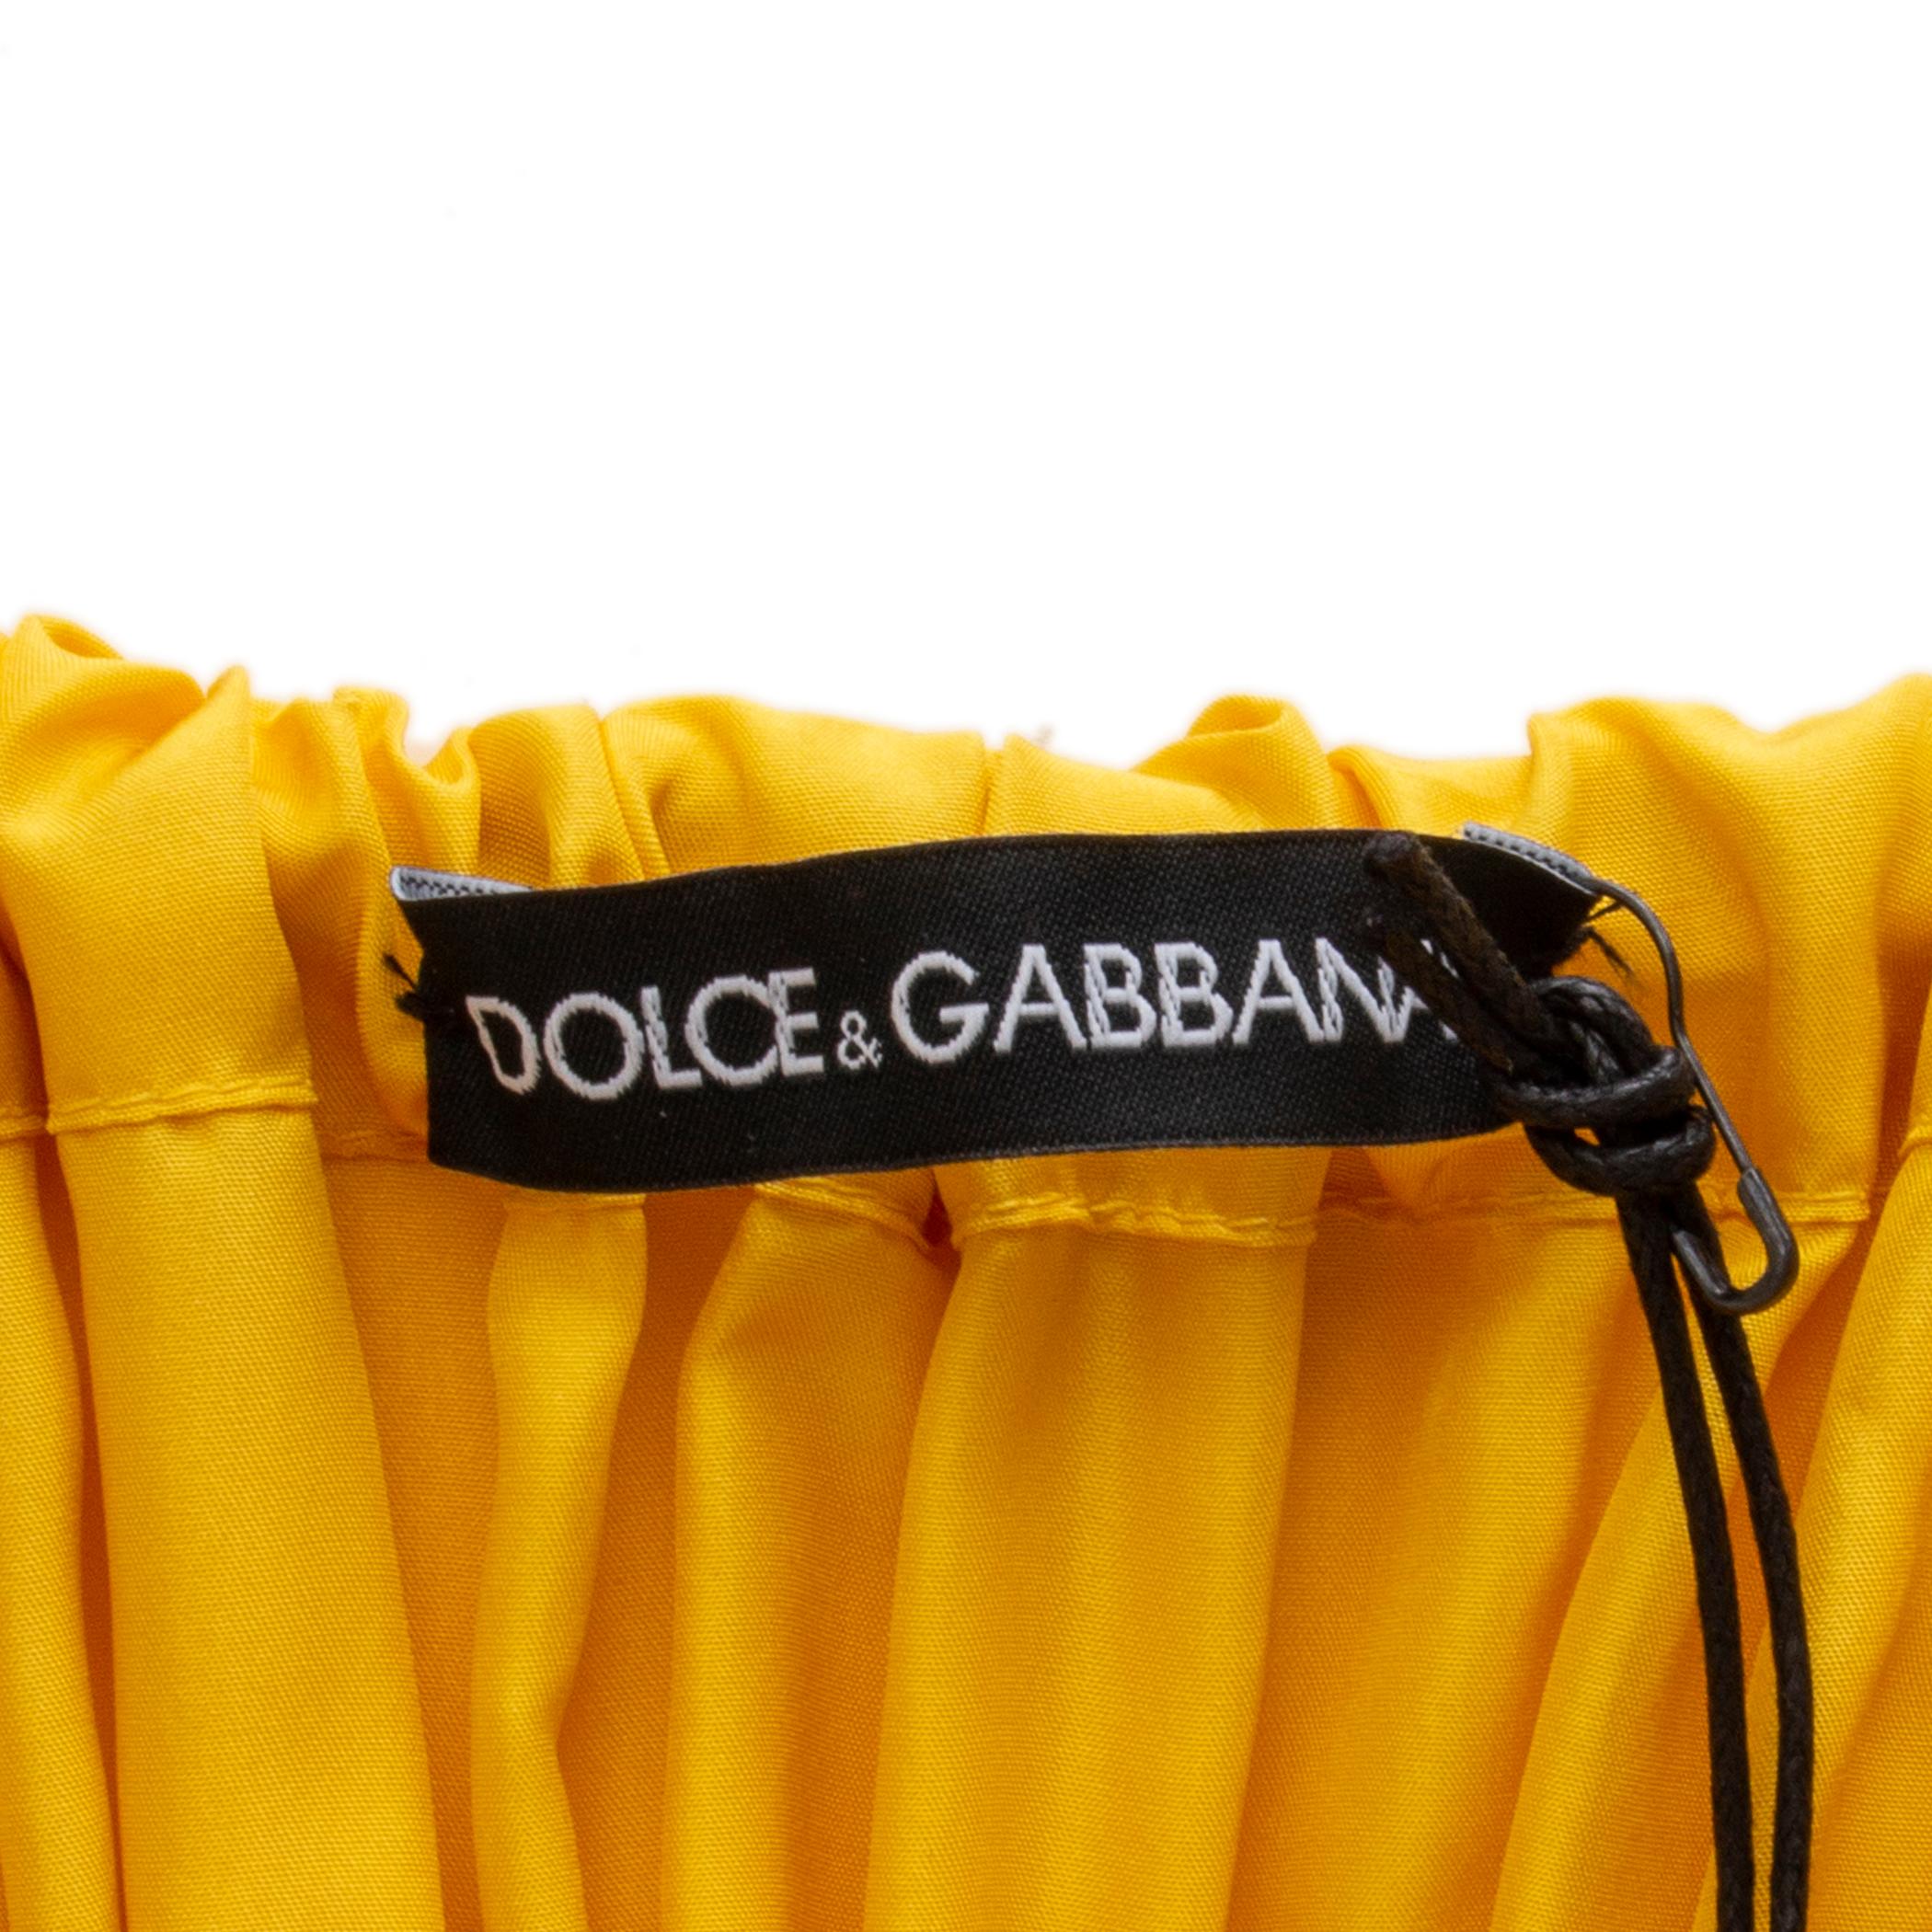 dolce & gabbana yellow dress